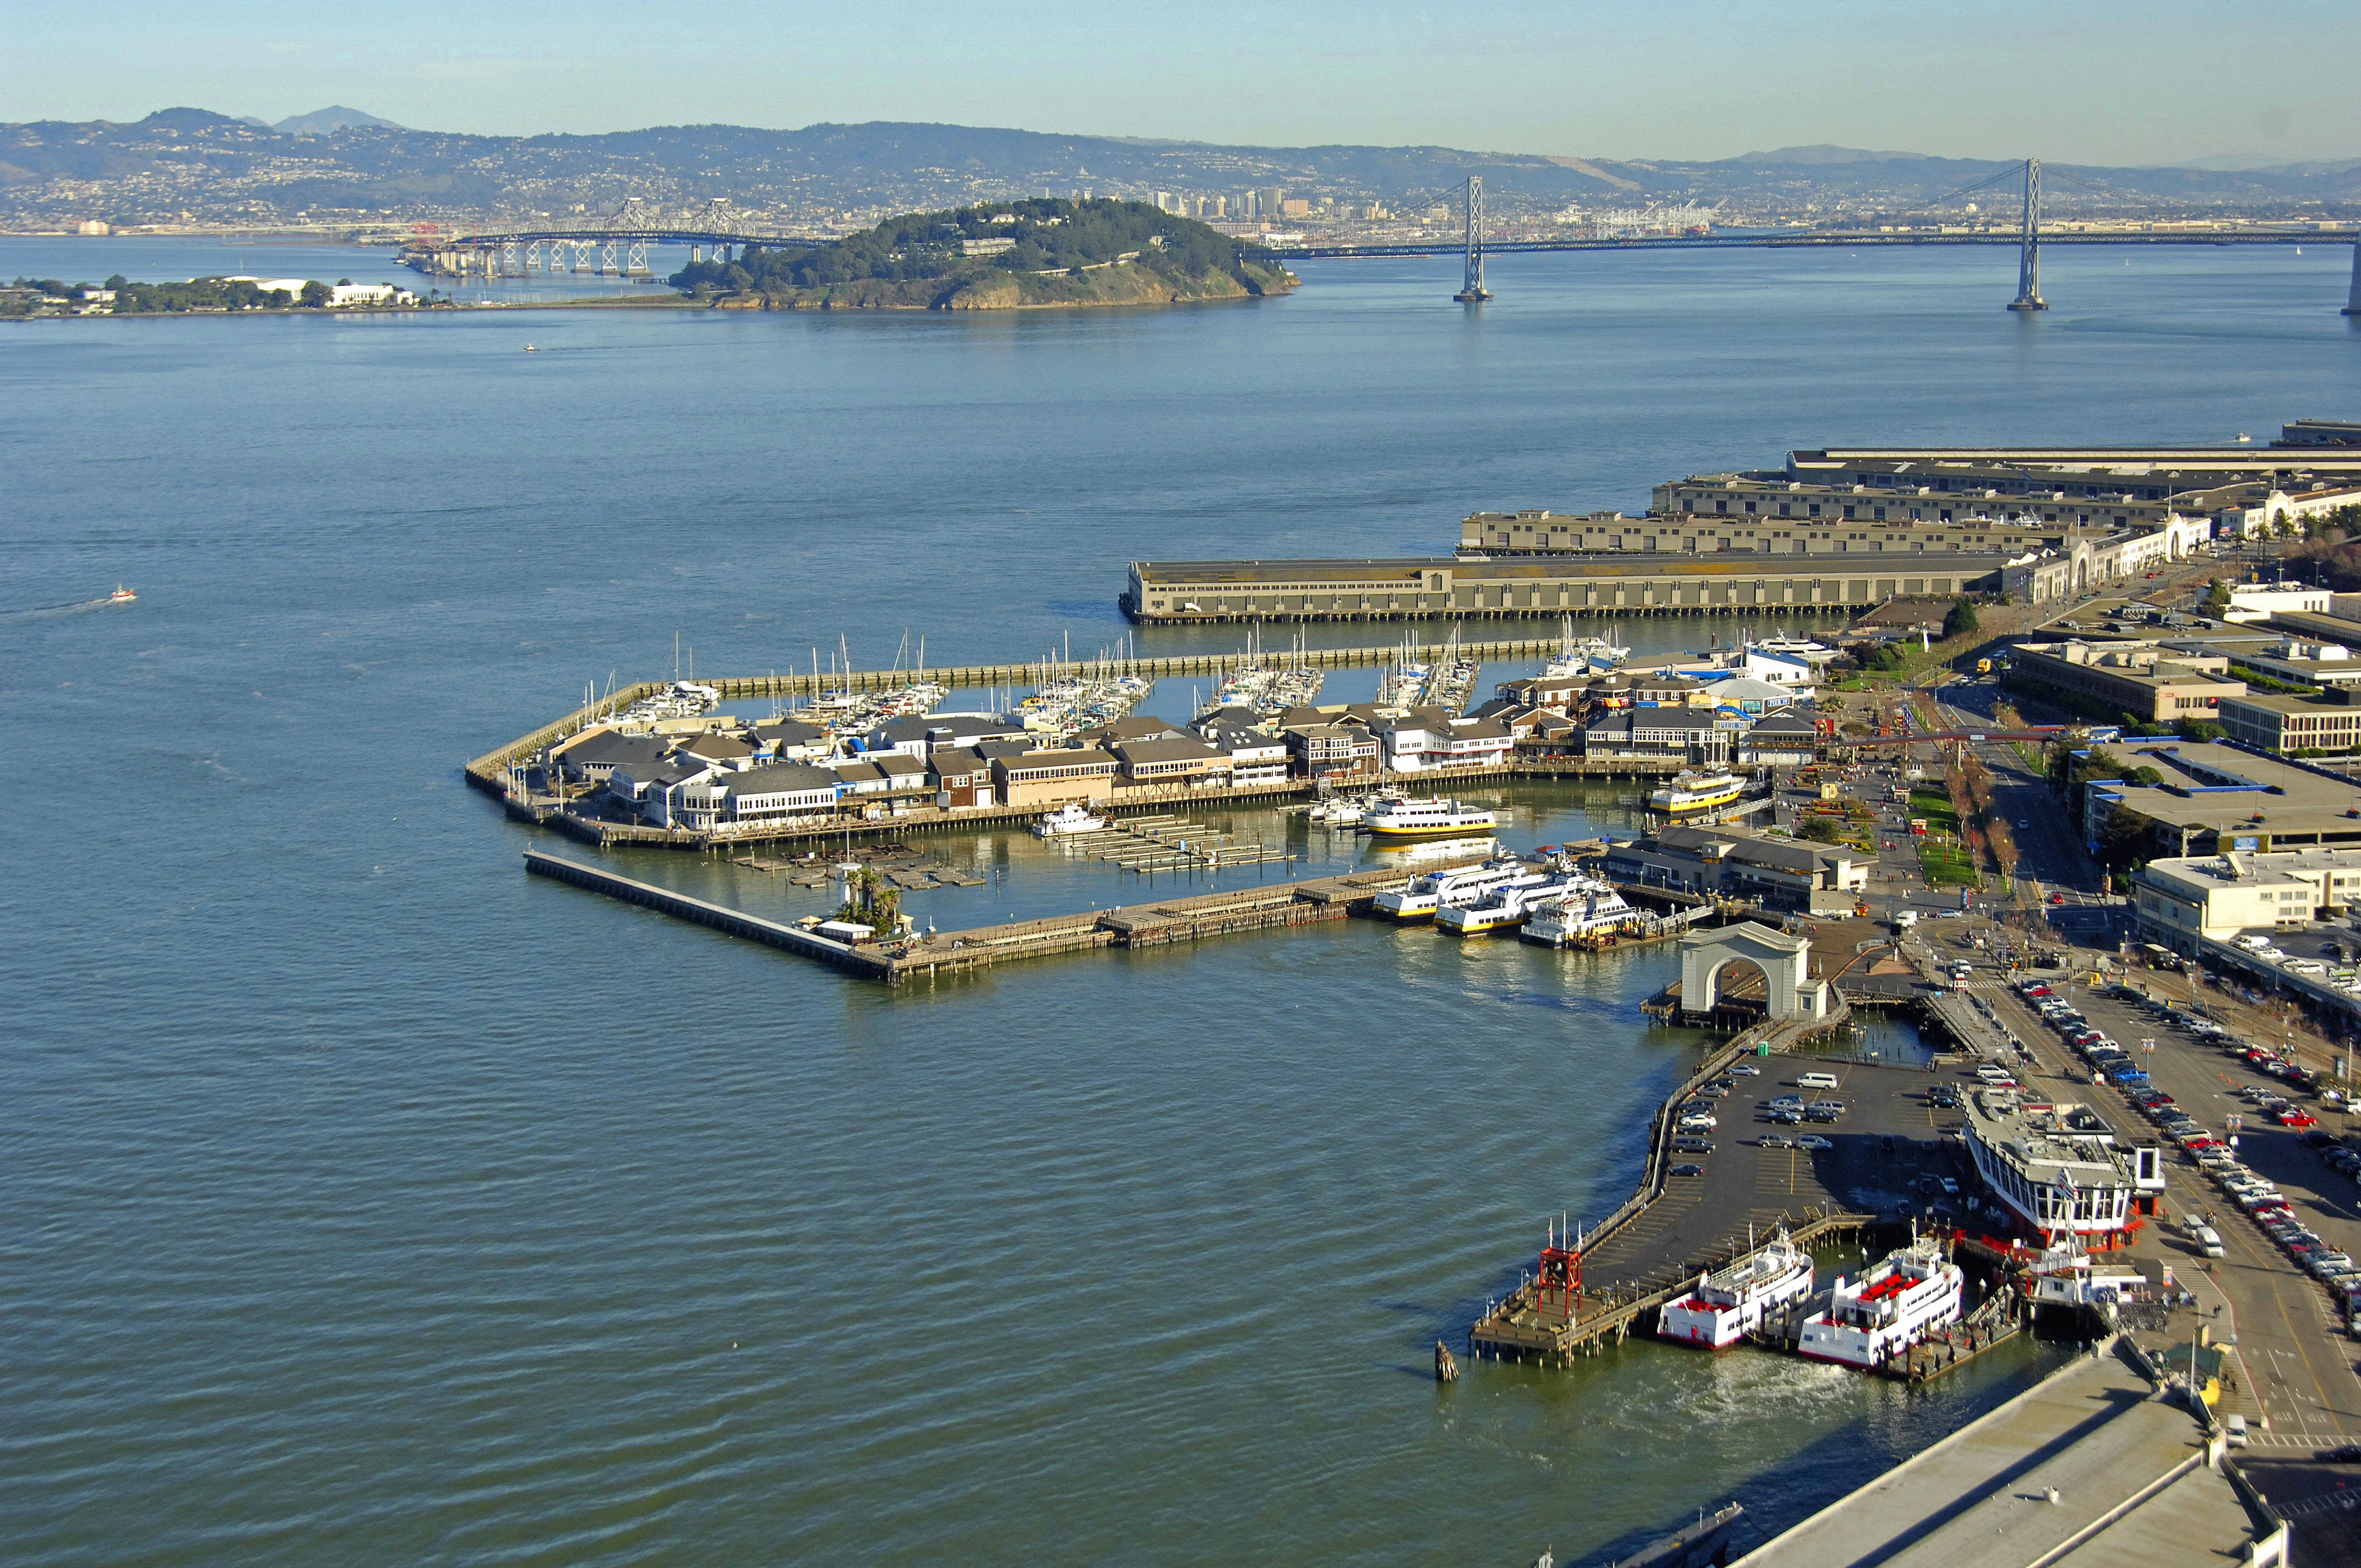 Pier 39 Marina in San Francisco, CA, United States - Marina Reviews ...